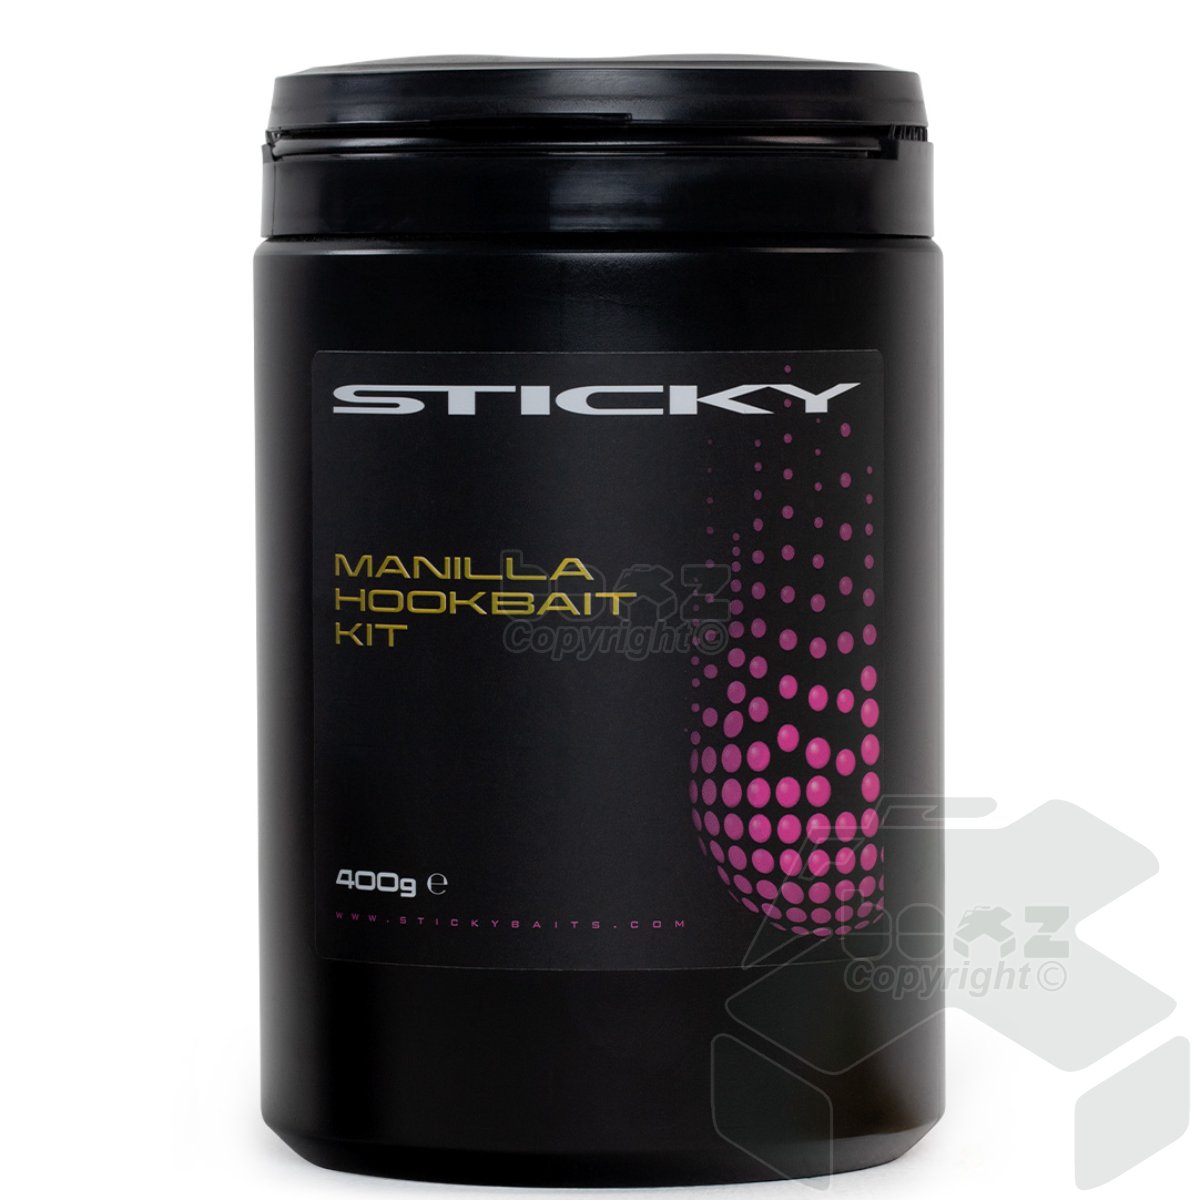 Sticky Manilla Hookbait Kit 400g Pot